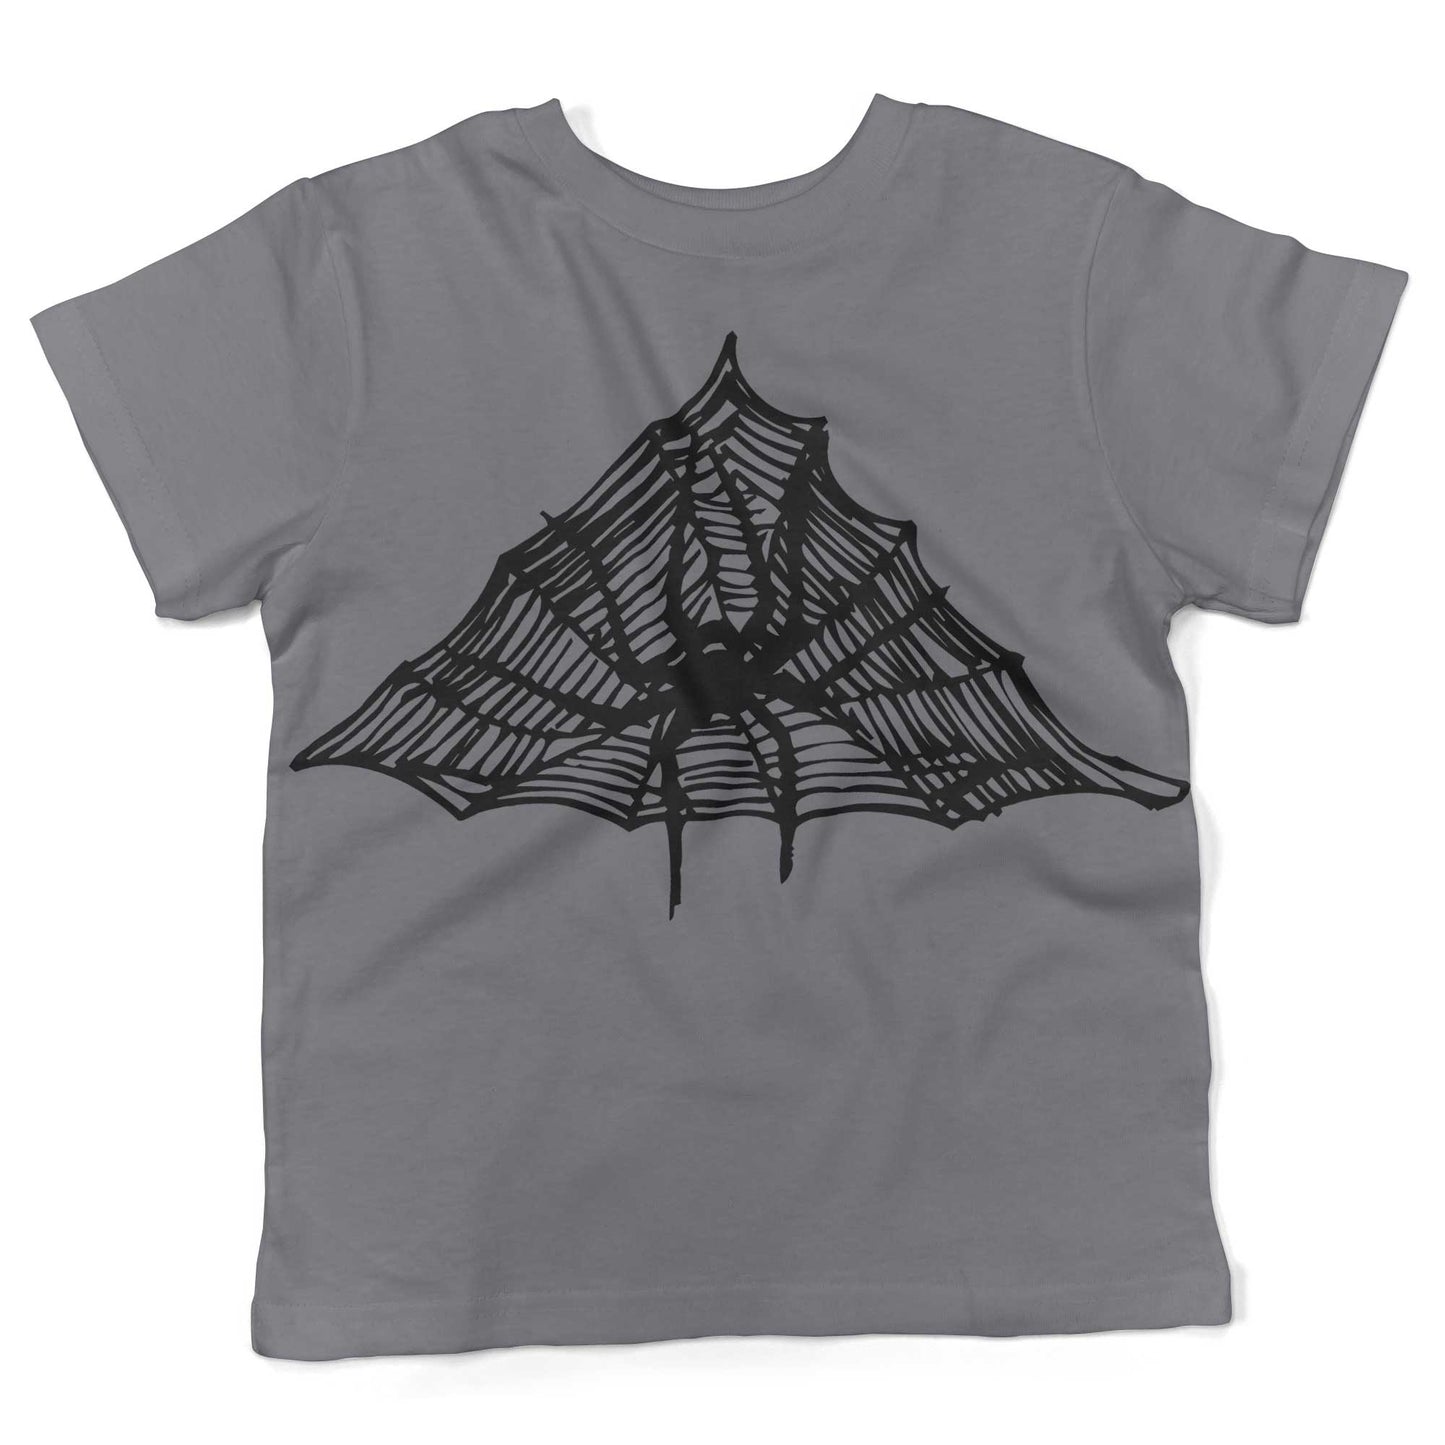 Spiderweb Toddler Shirt-Slate-2T